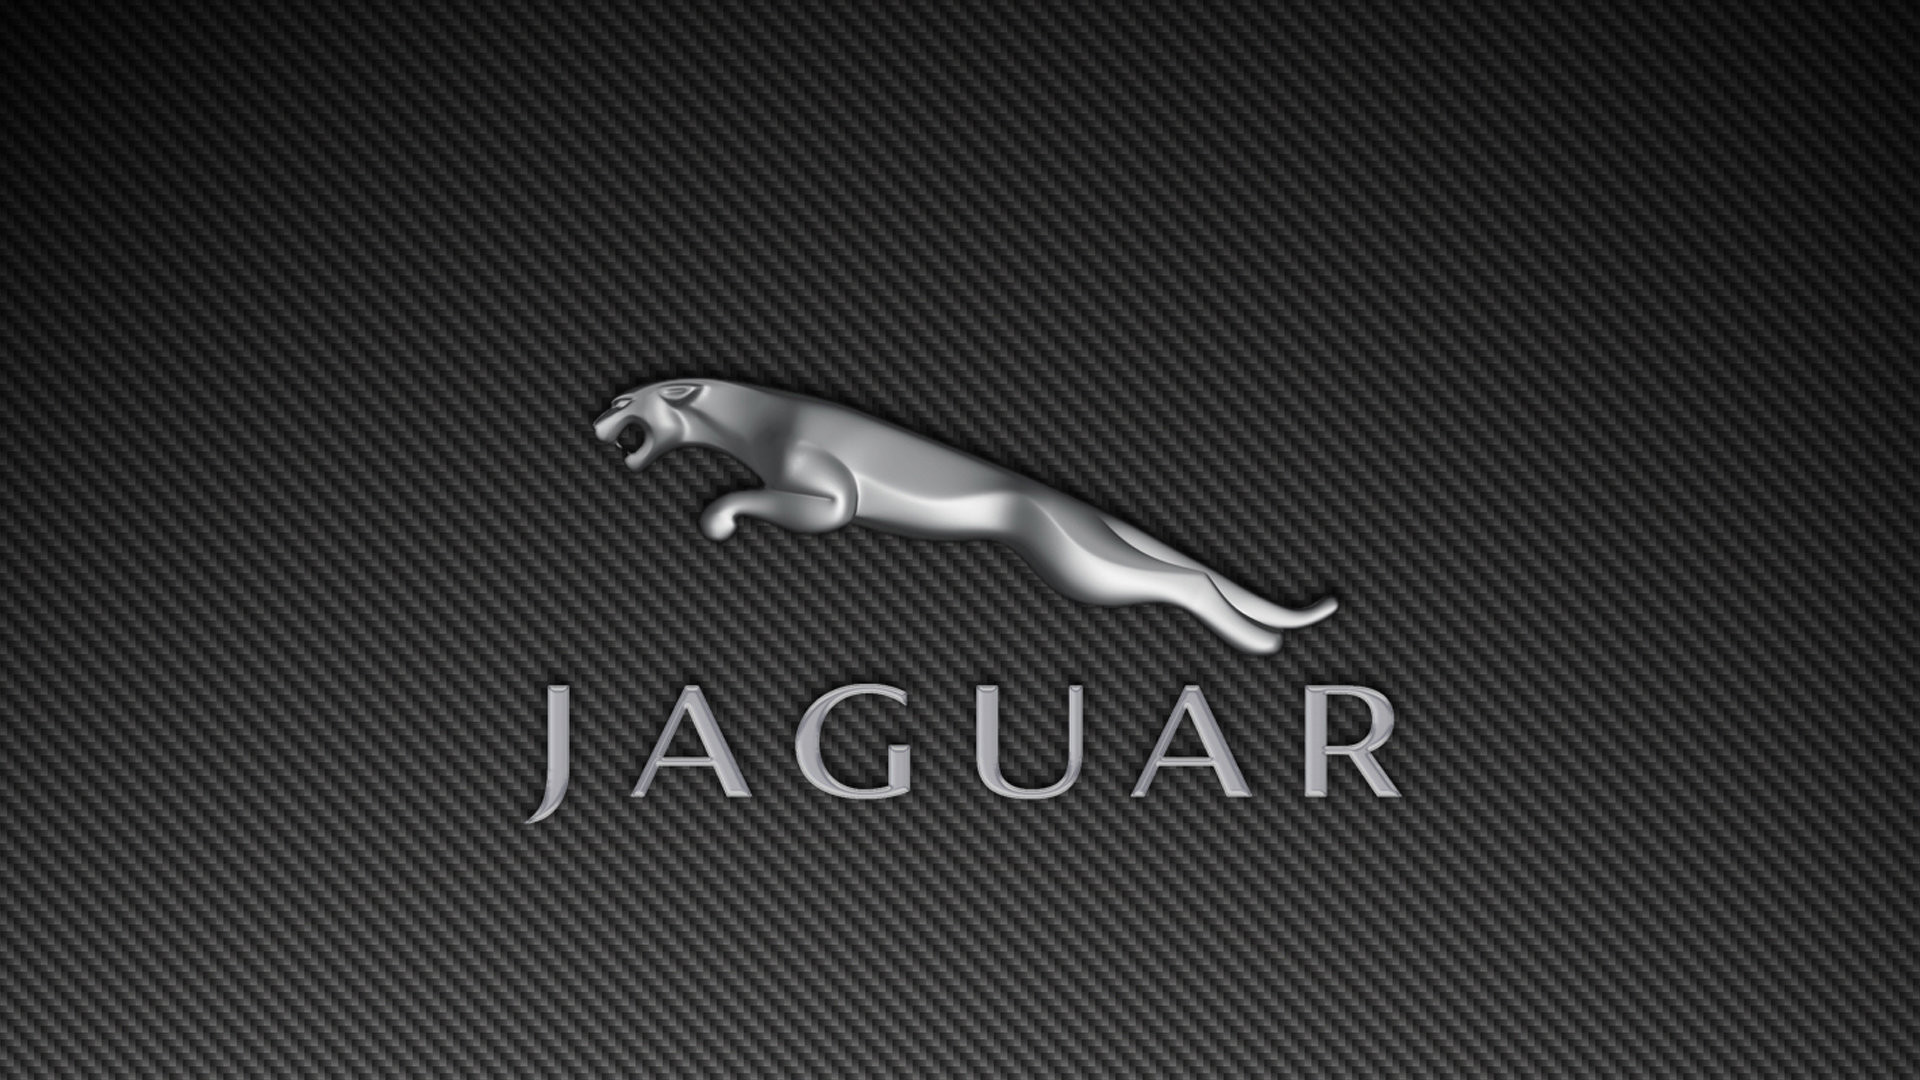 1920x1080 Jaguar Car HD Wallpapers 10 | Jaguar | Pinterest | Hd wallpaper and Cars